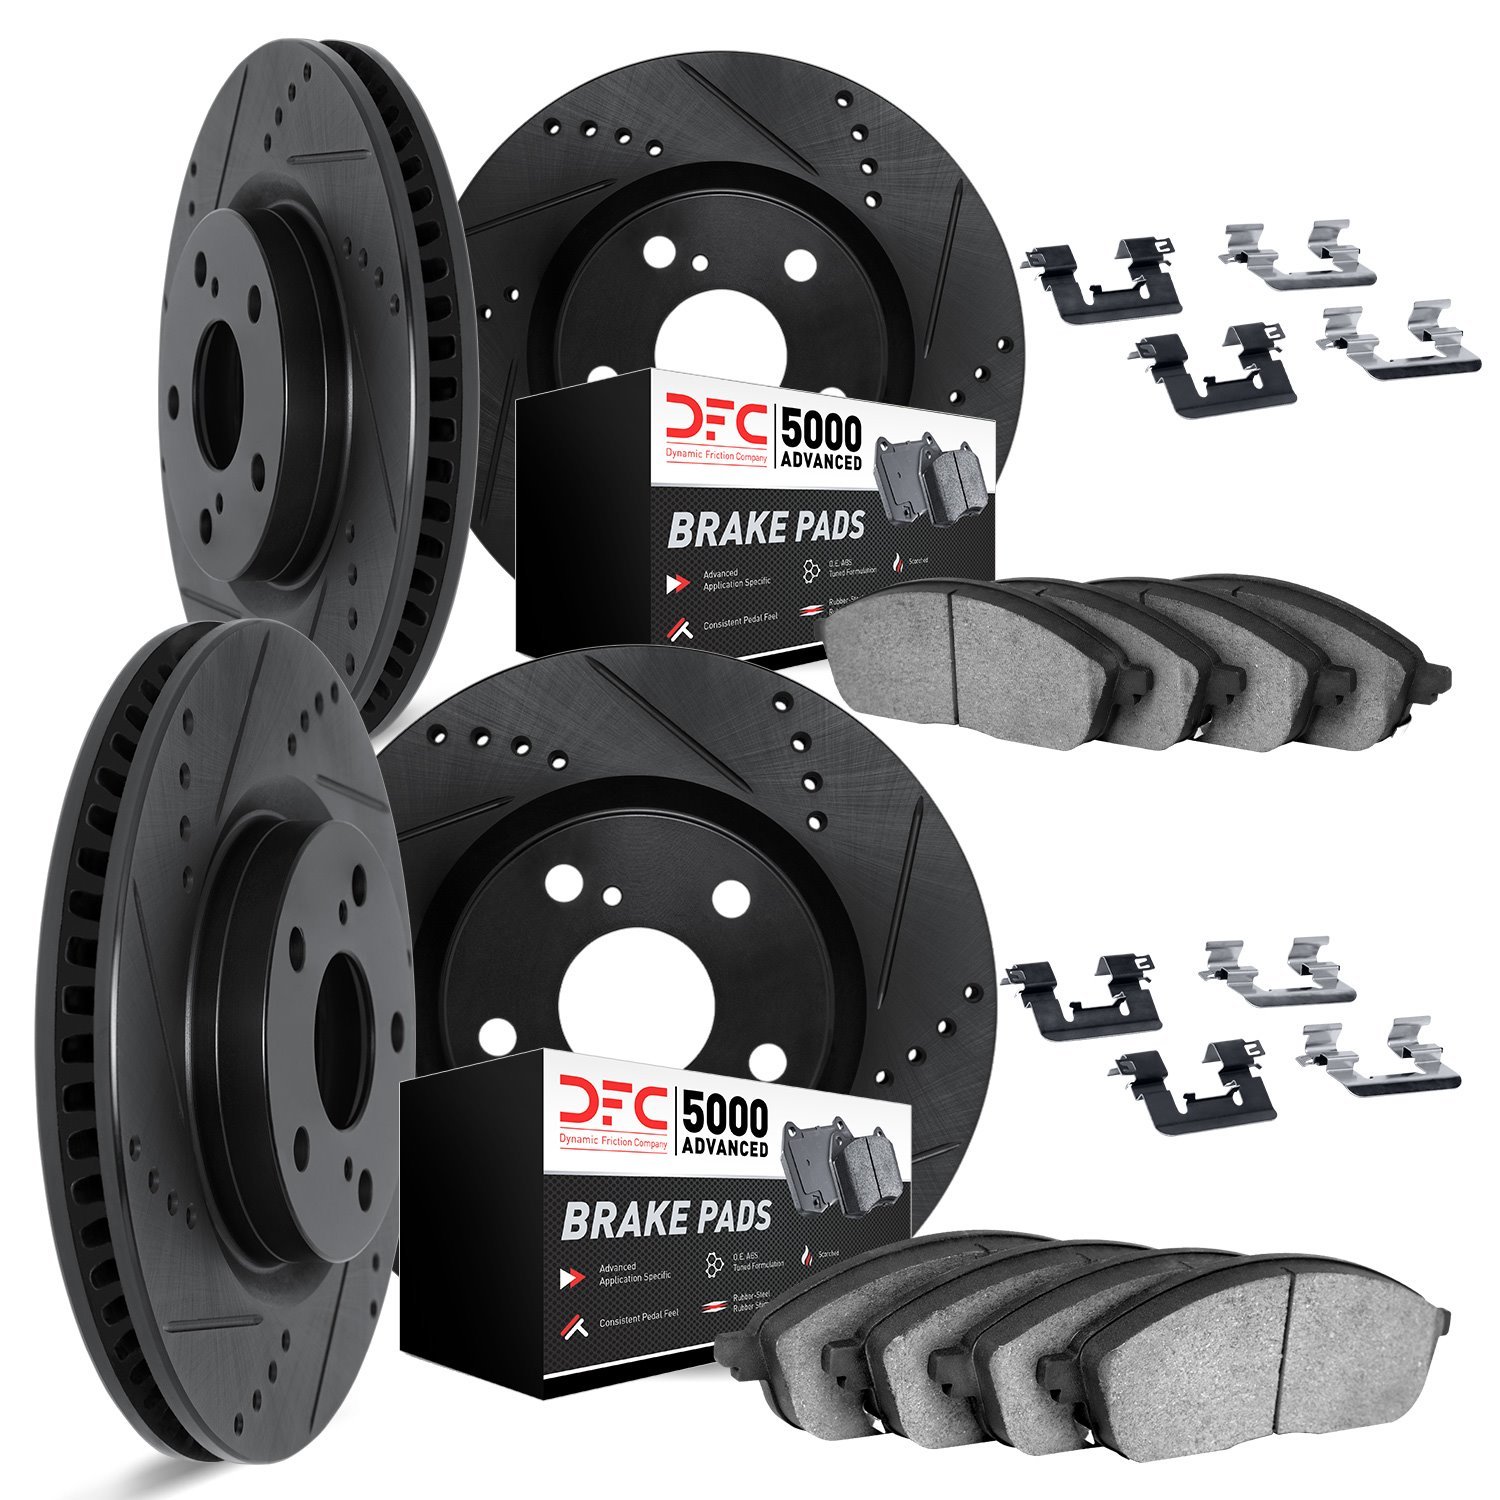 8514-67076 Drilled/Slotted Brake Rotors w/5000 Advanced Brake Pads Kit & Hardware [Black], 2014-2019 Infiniti/Nissan, Position: